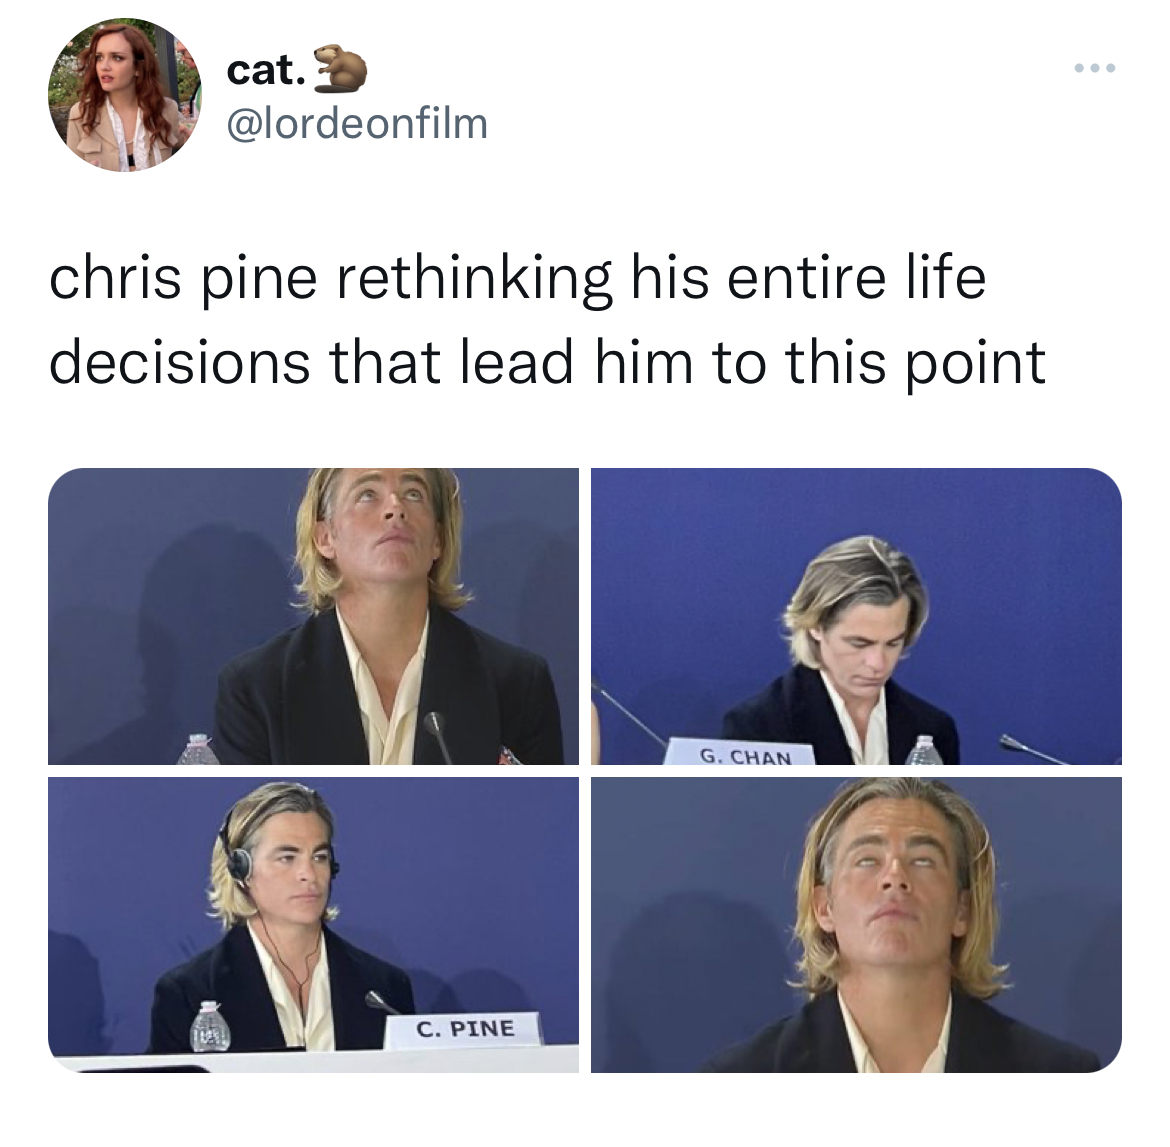 Chris Pine Venice Film Festival Memes - Chris Pine - cat. chris pine rethinking his entire life decisions that lead him to this point C. Pine G. Chan www